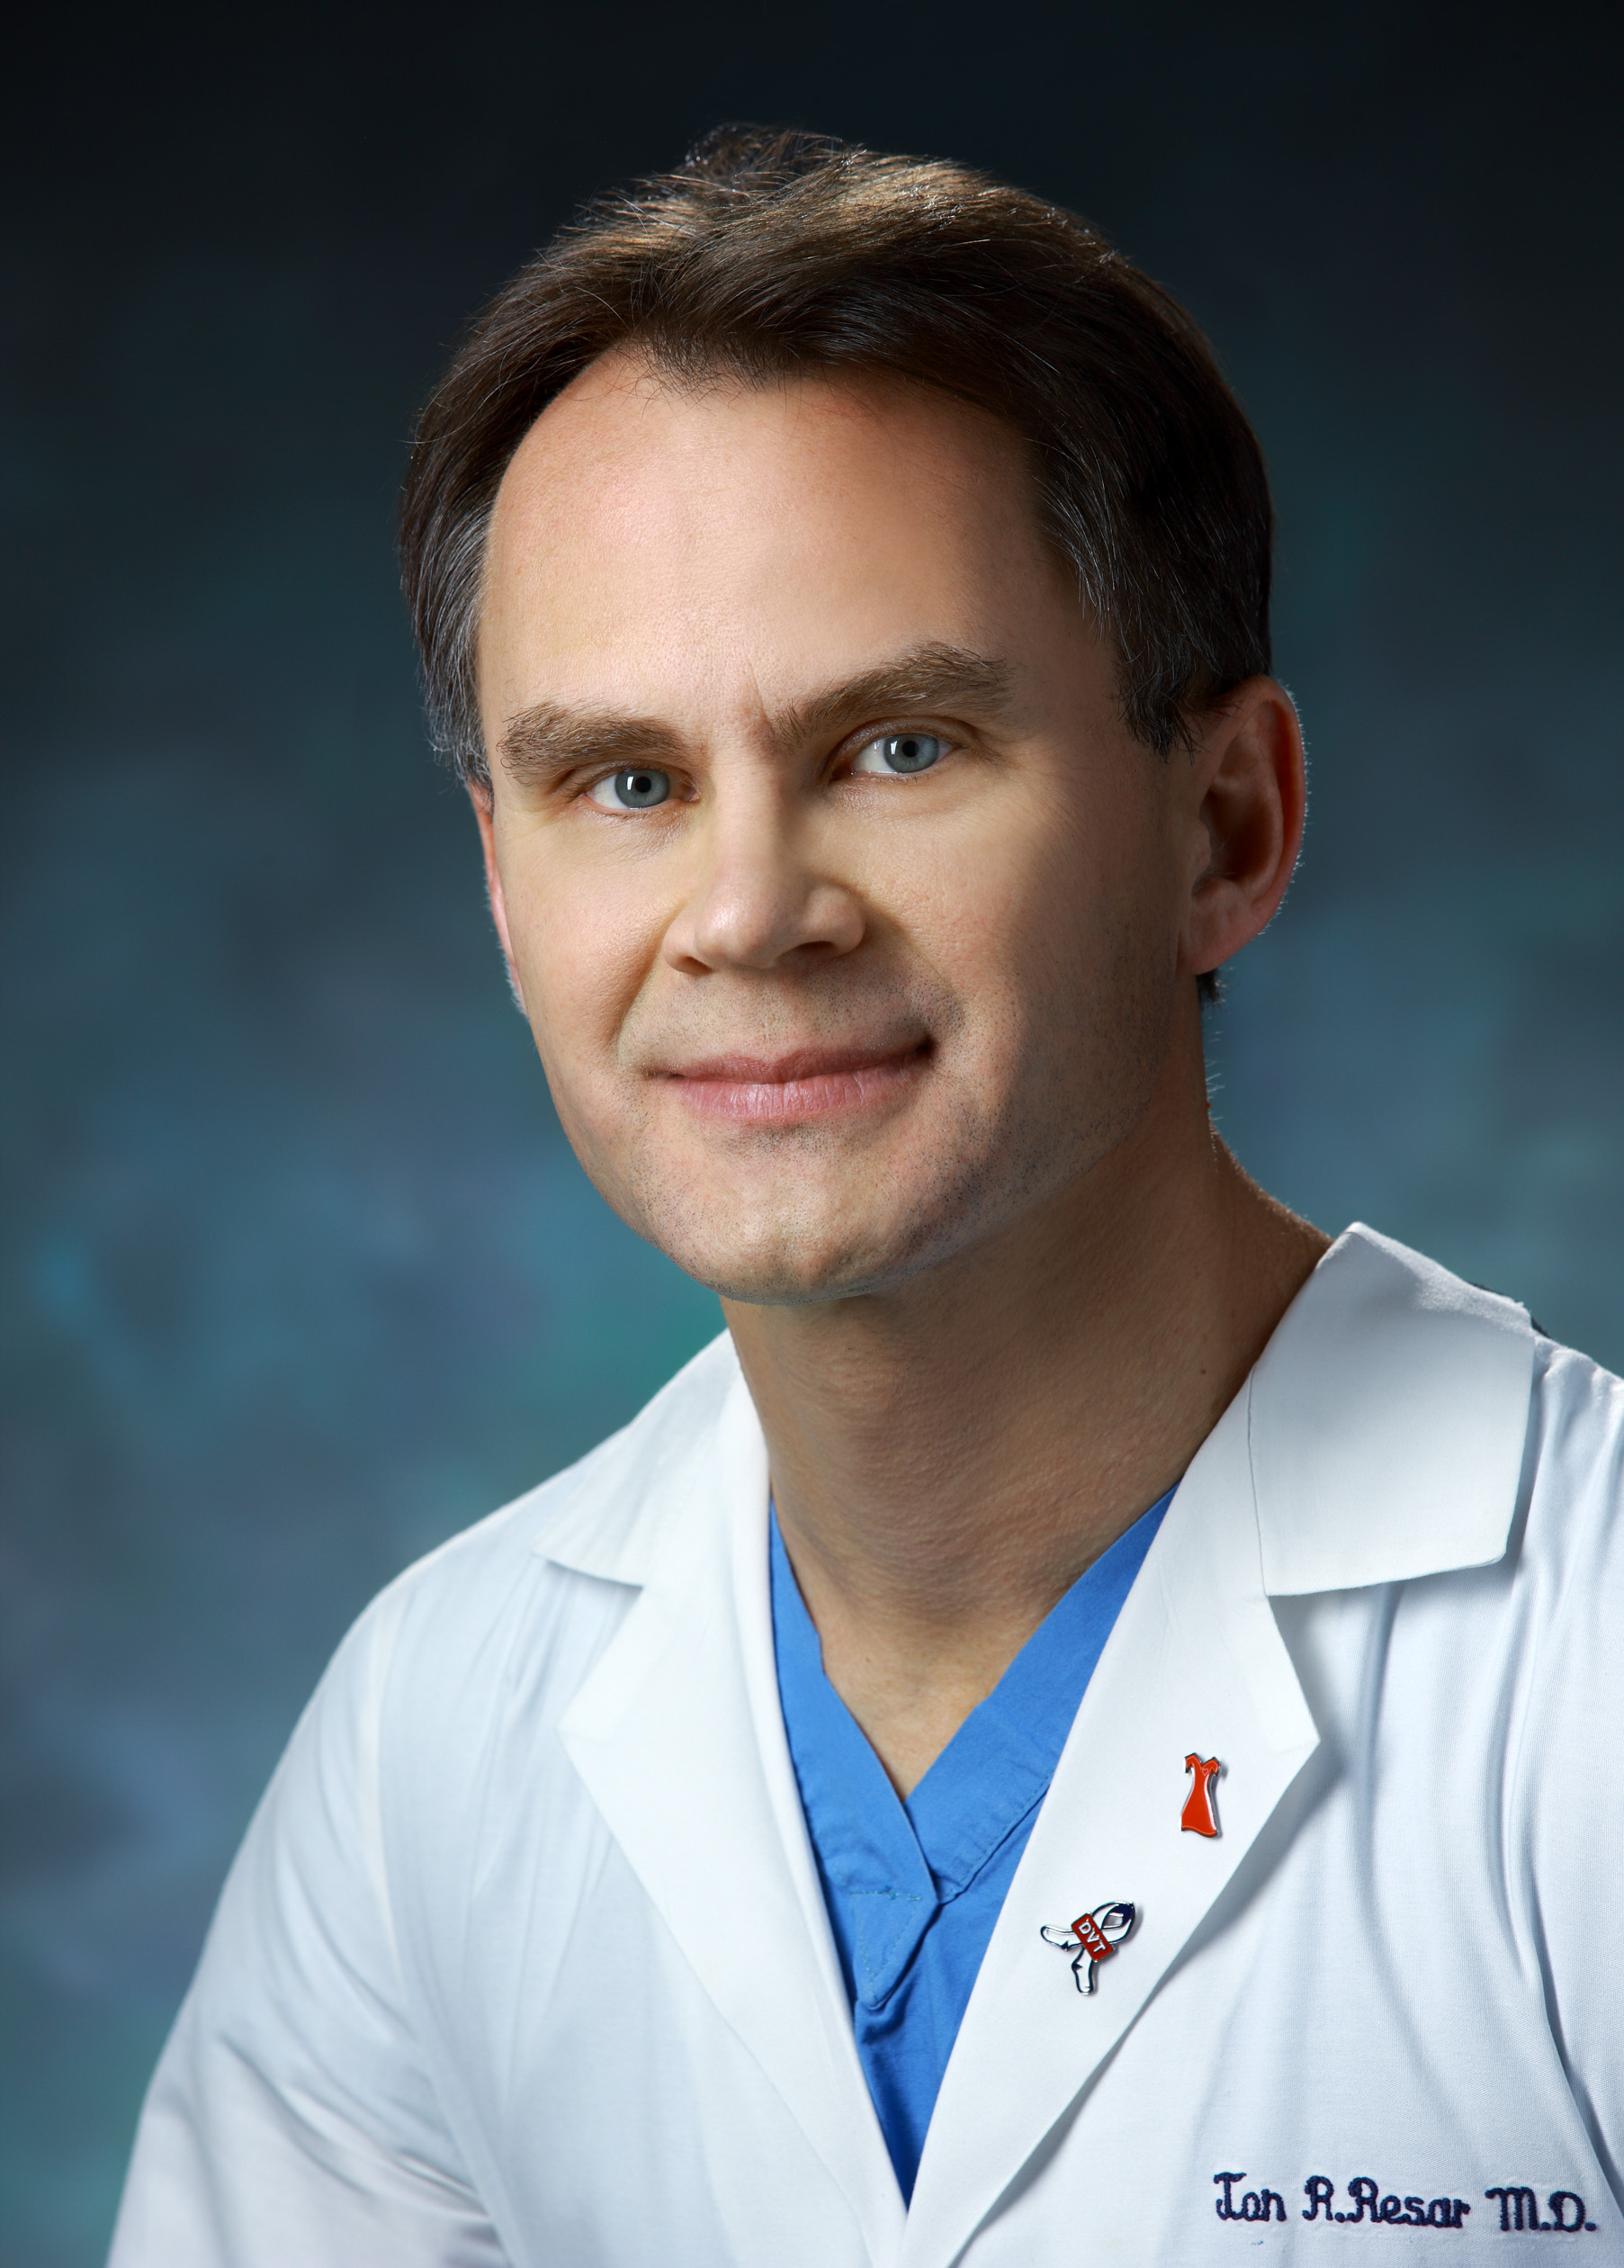 Photo of Jon Resar, director of the Adult Cardiac Catheterization Laboratory at The Johns Hopkins Hospital